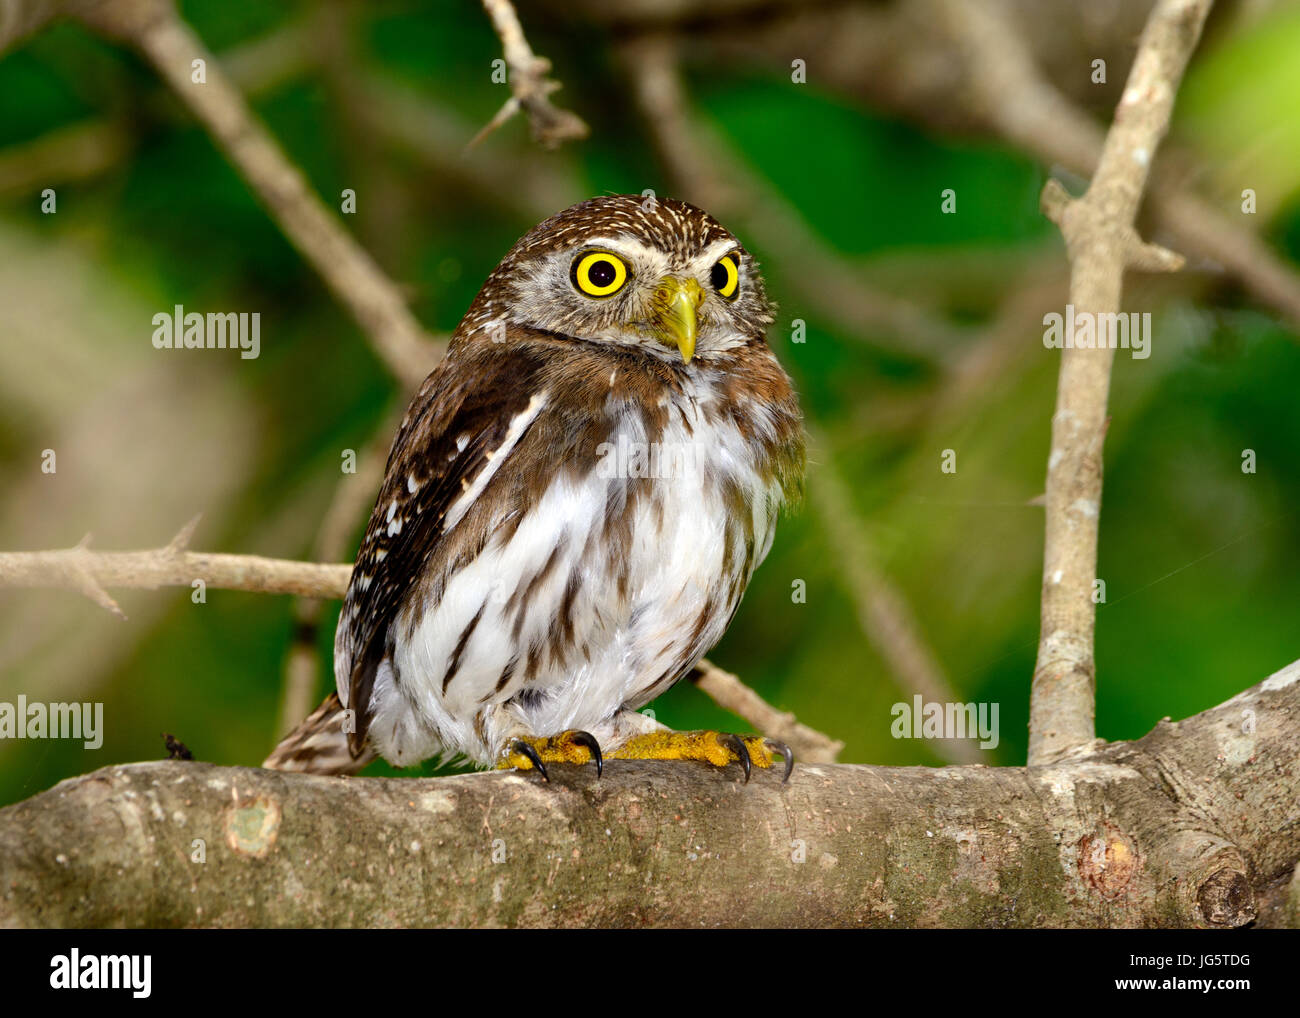 Ferruginous Pygmy-owl  (Glaucidium brasilianum) perched on branch, talons showing. Stock Photo